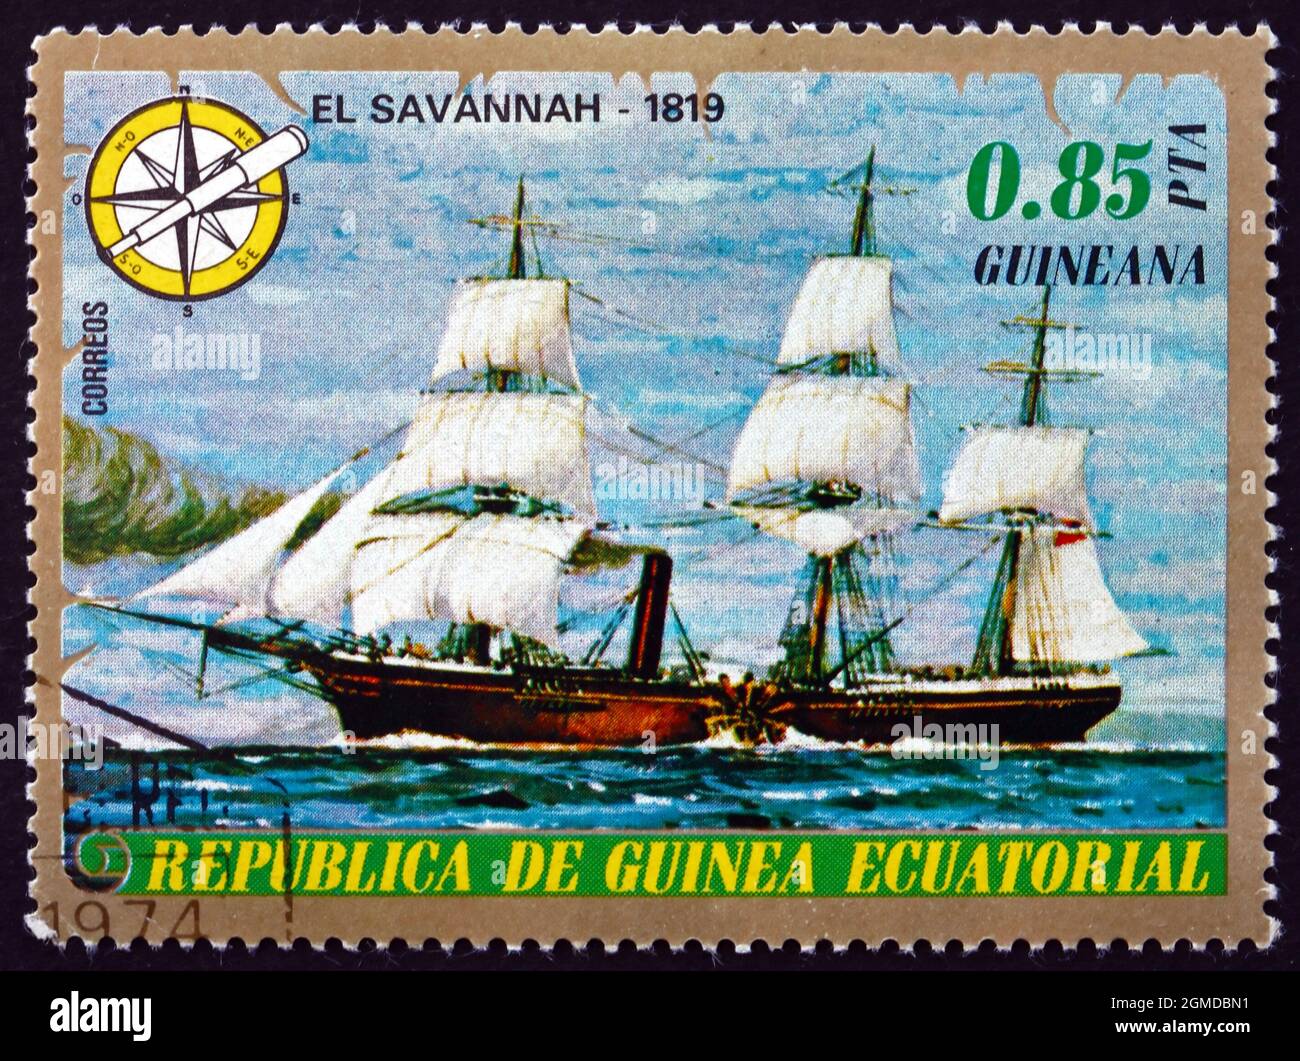 GUINEA ECUATORIAL - CIRCA 1976: Un sello impreso en Guinea Ecuatorial muestra el barco de vapor Sawannah, el primer barco de vapor que ha cruzado el Atlántico, circ Foto de stock